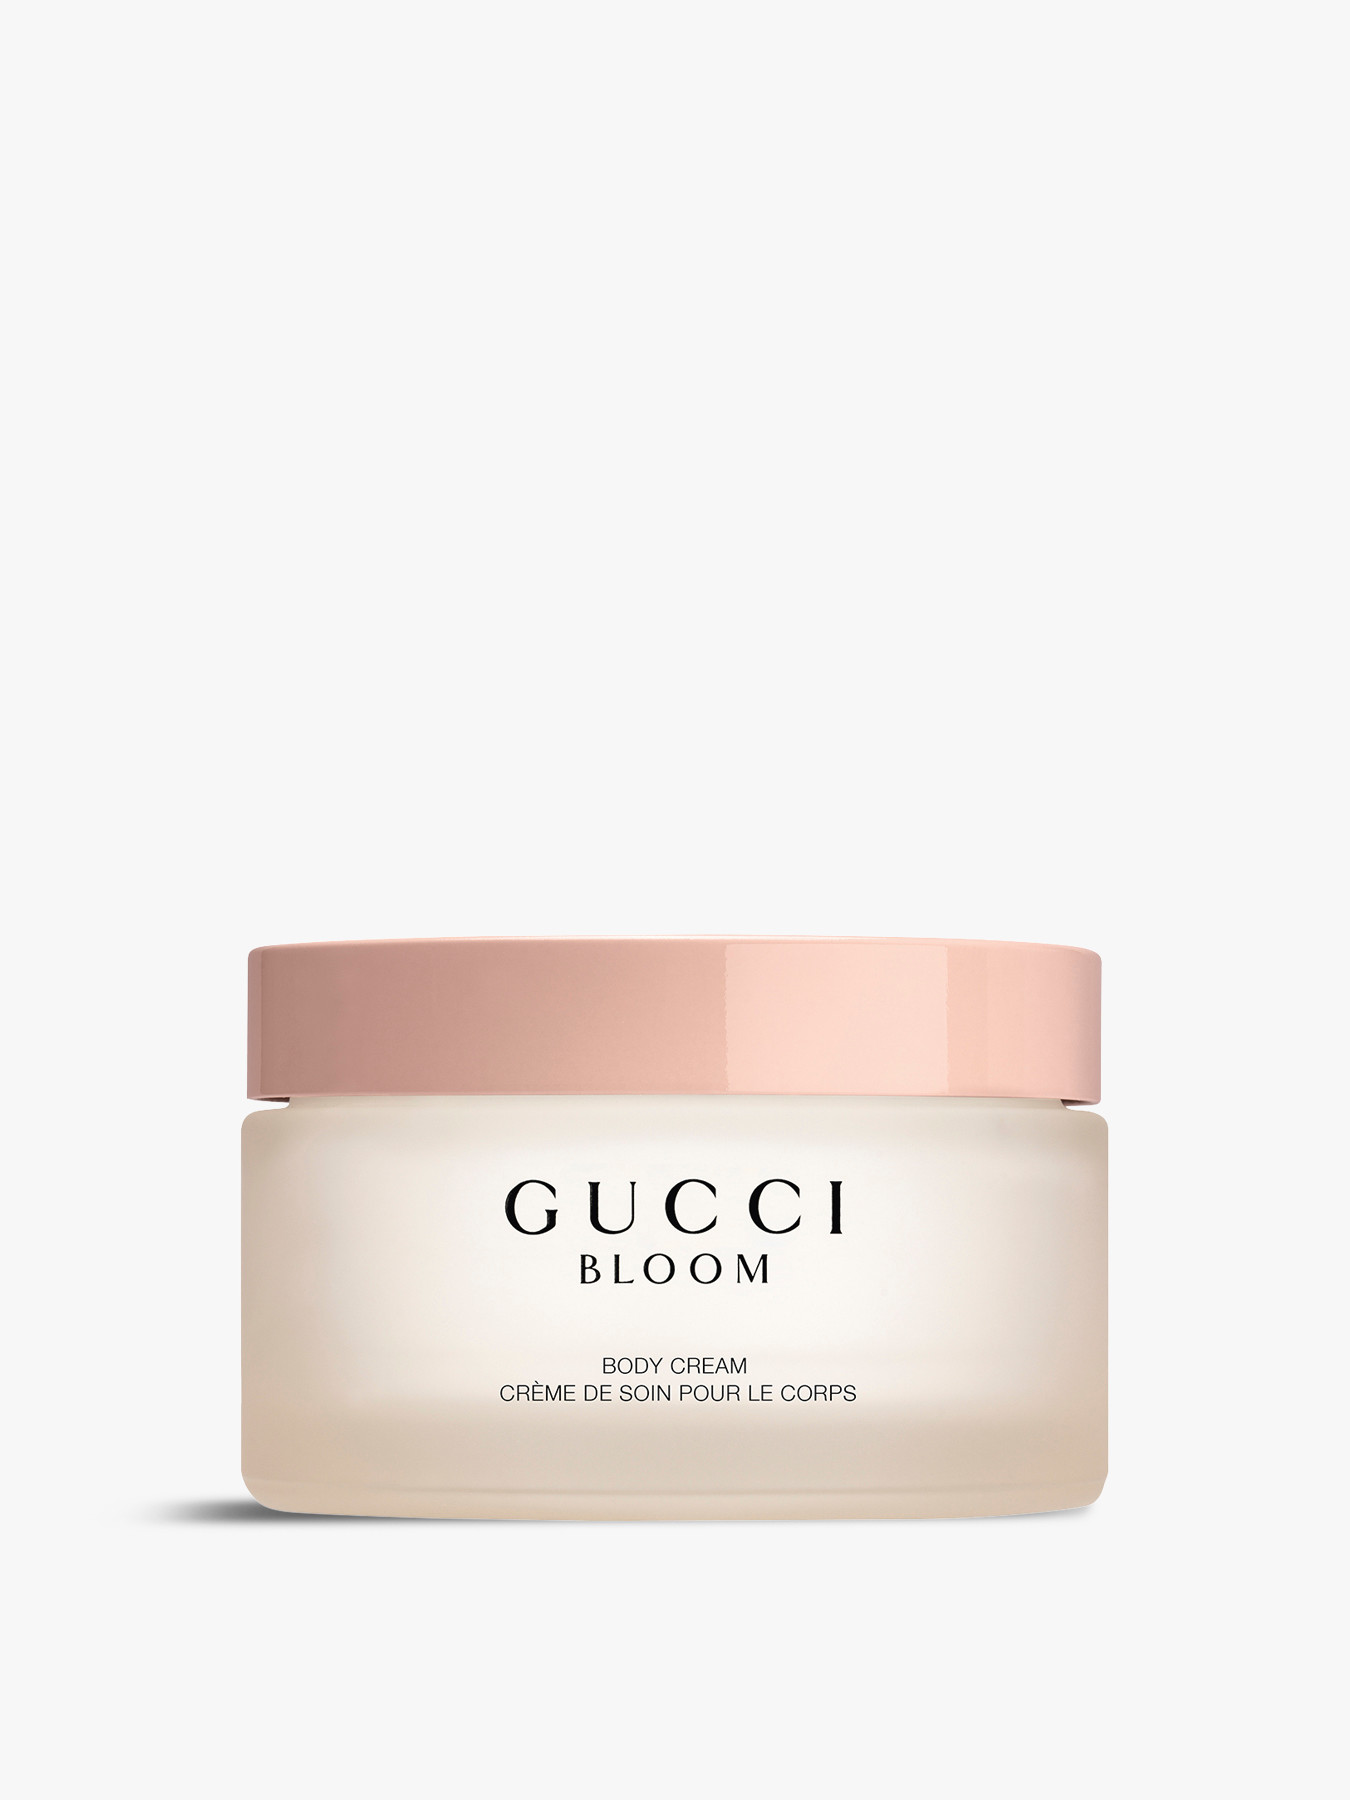 GUCCI BEAUTY Bloom Body Cream 180ml | Fenwick